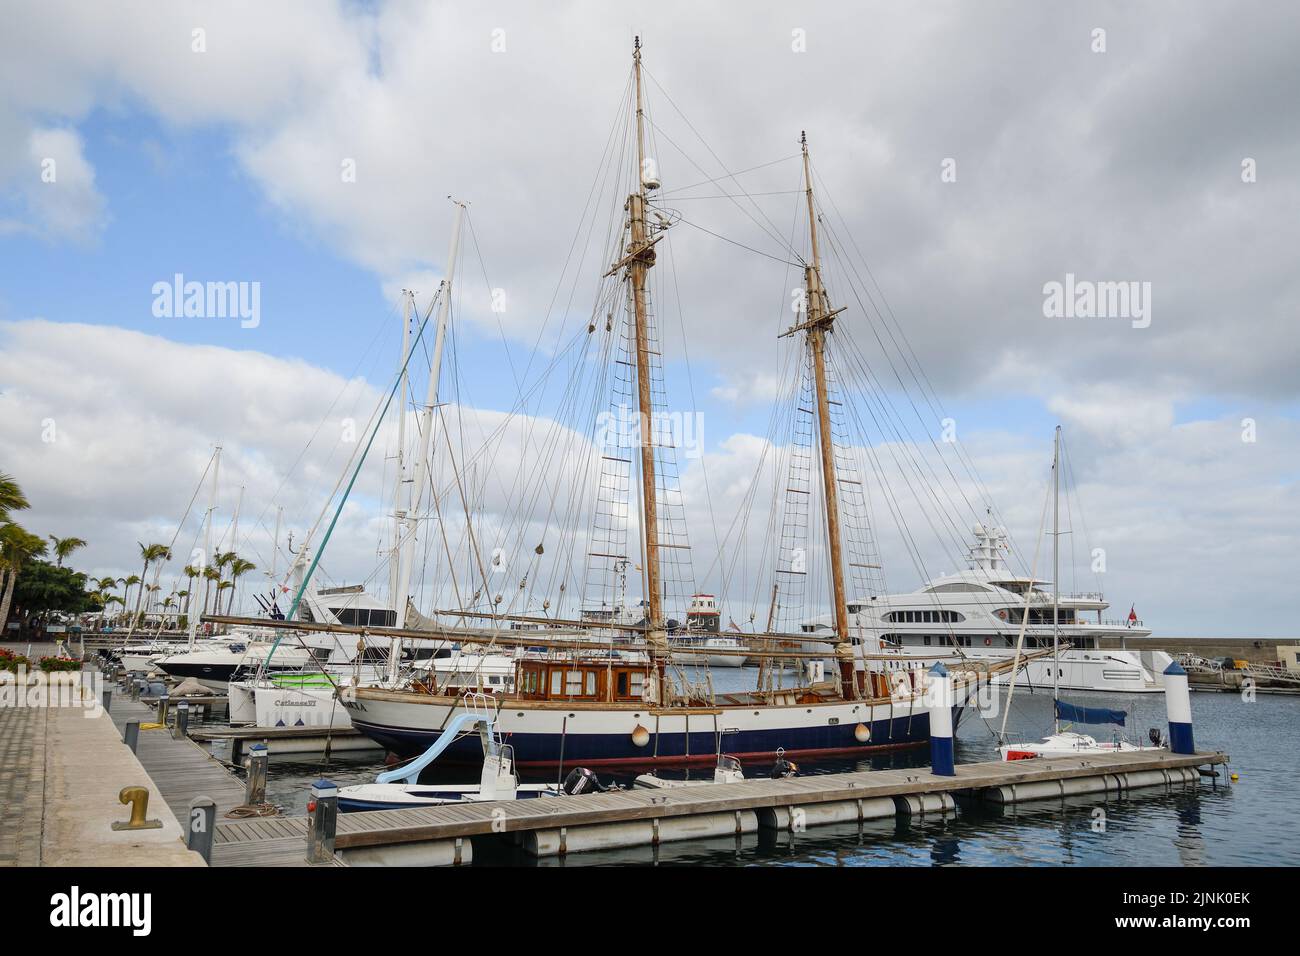 Puerto Calero marina in Lanzarote with a schooner in the foreground Stock Photo